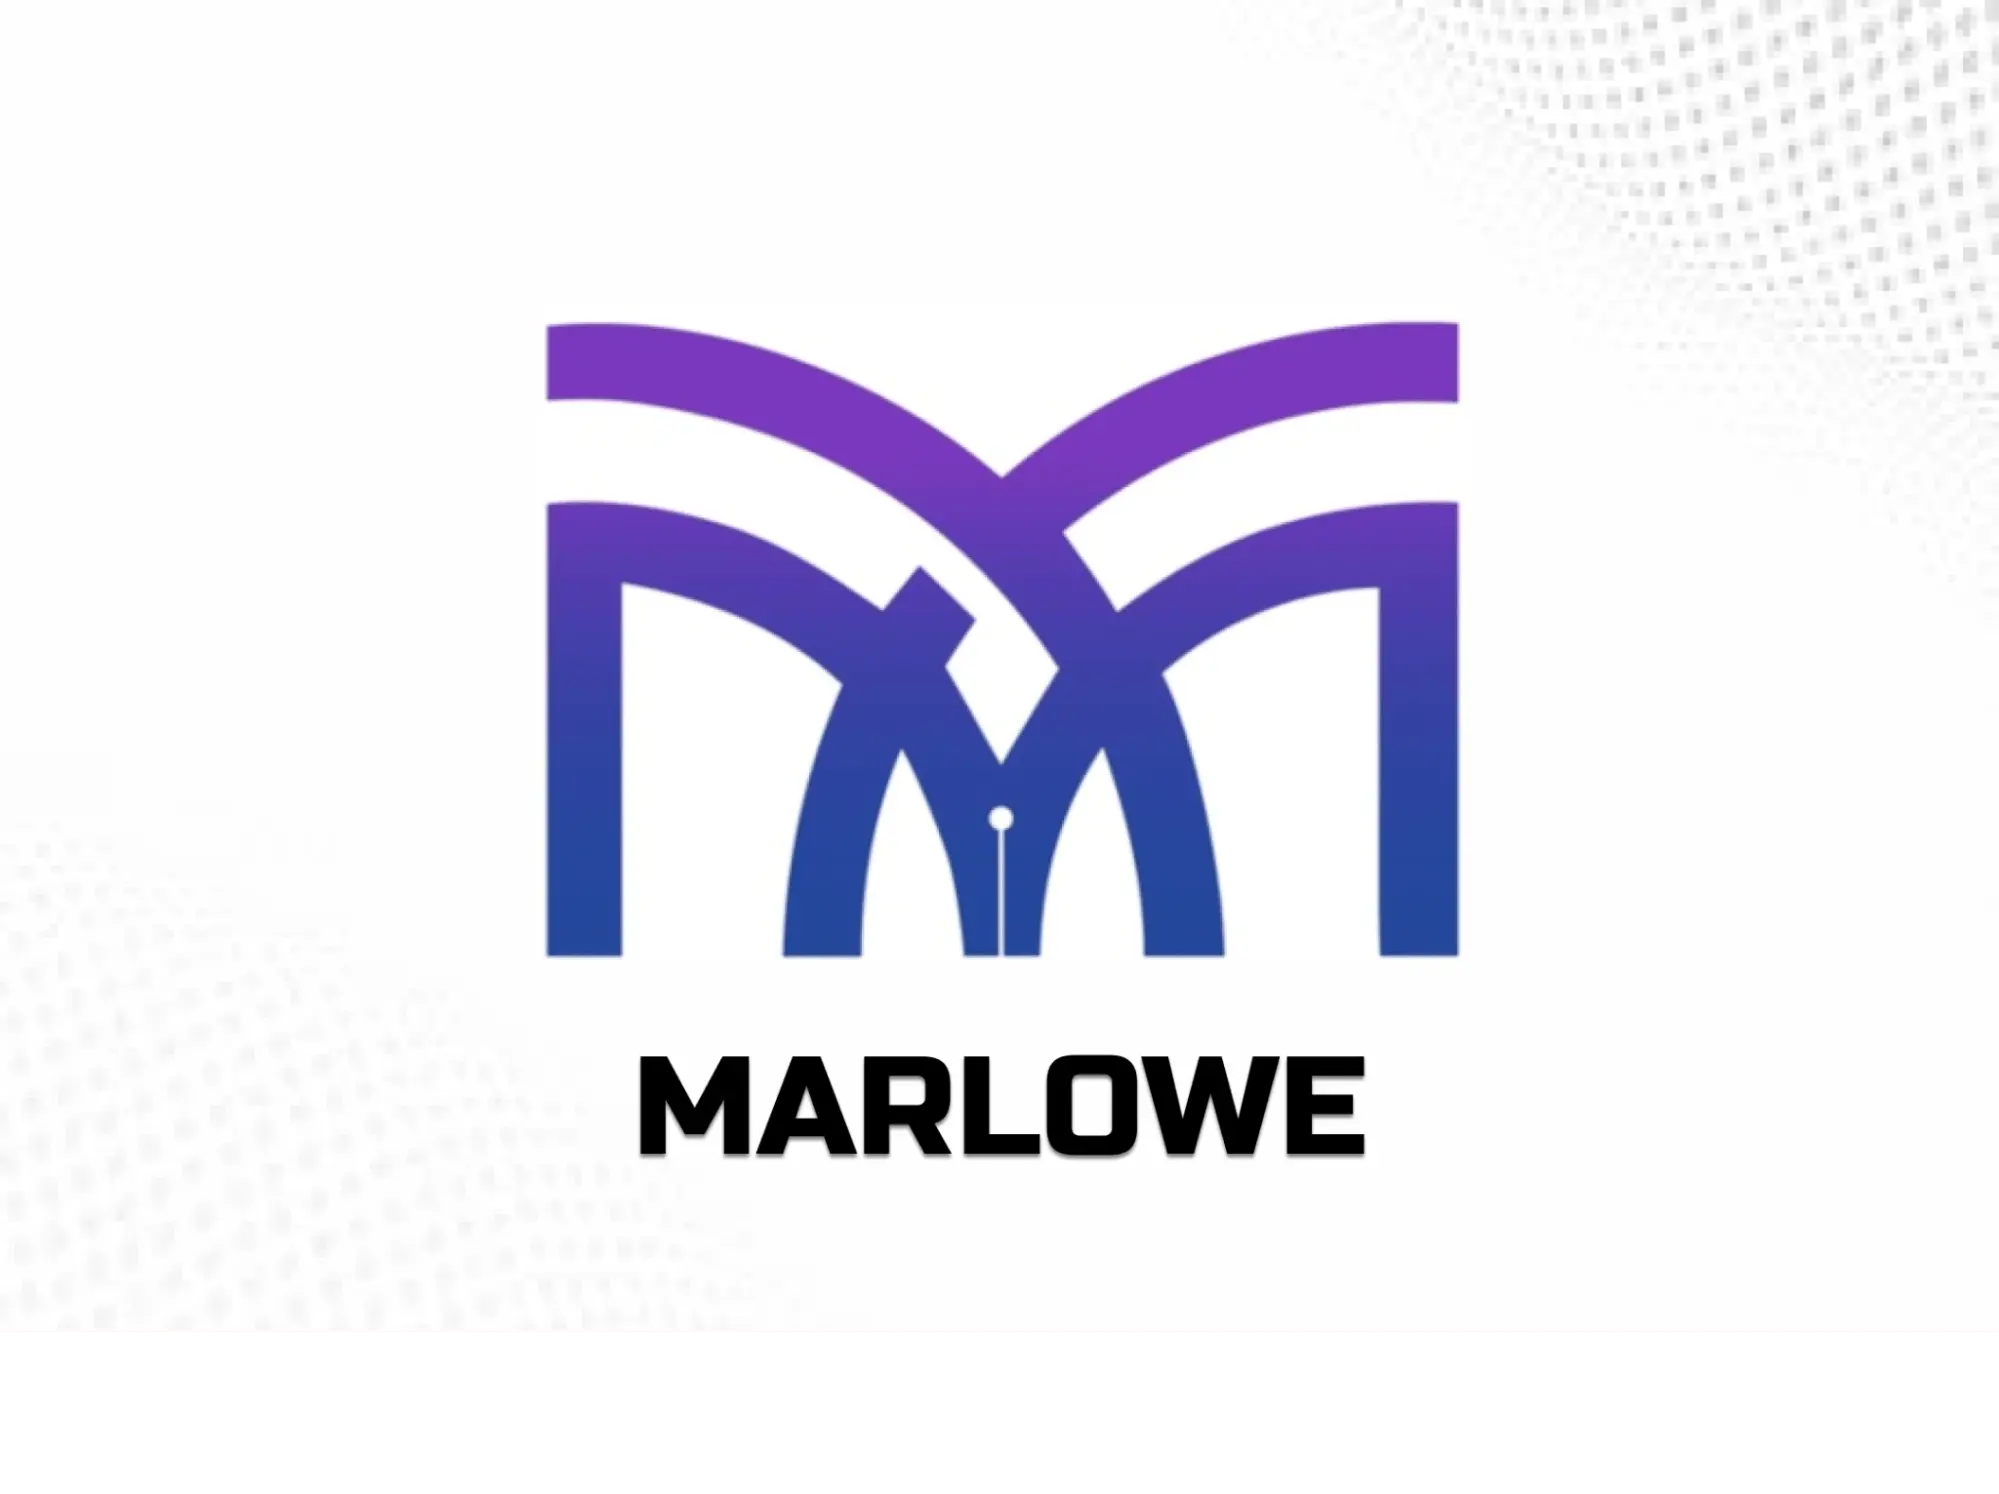 Marlowe logo